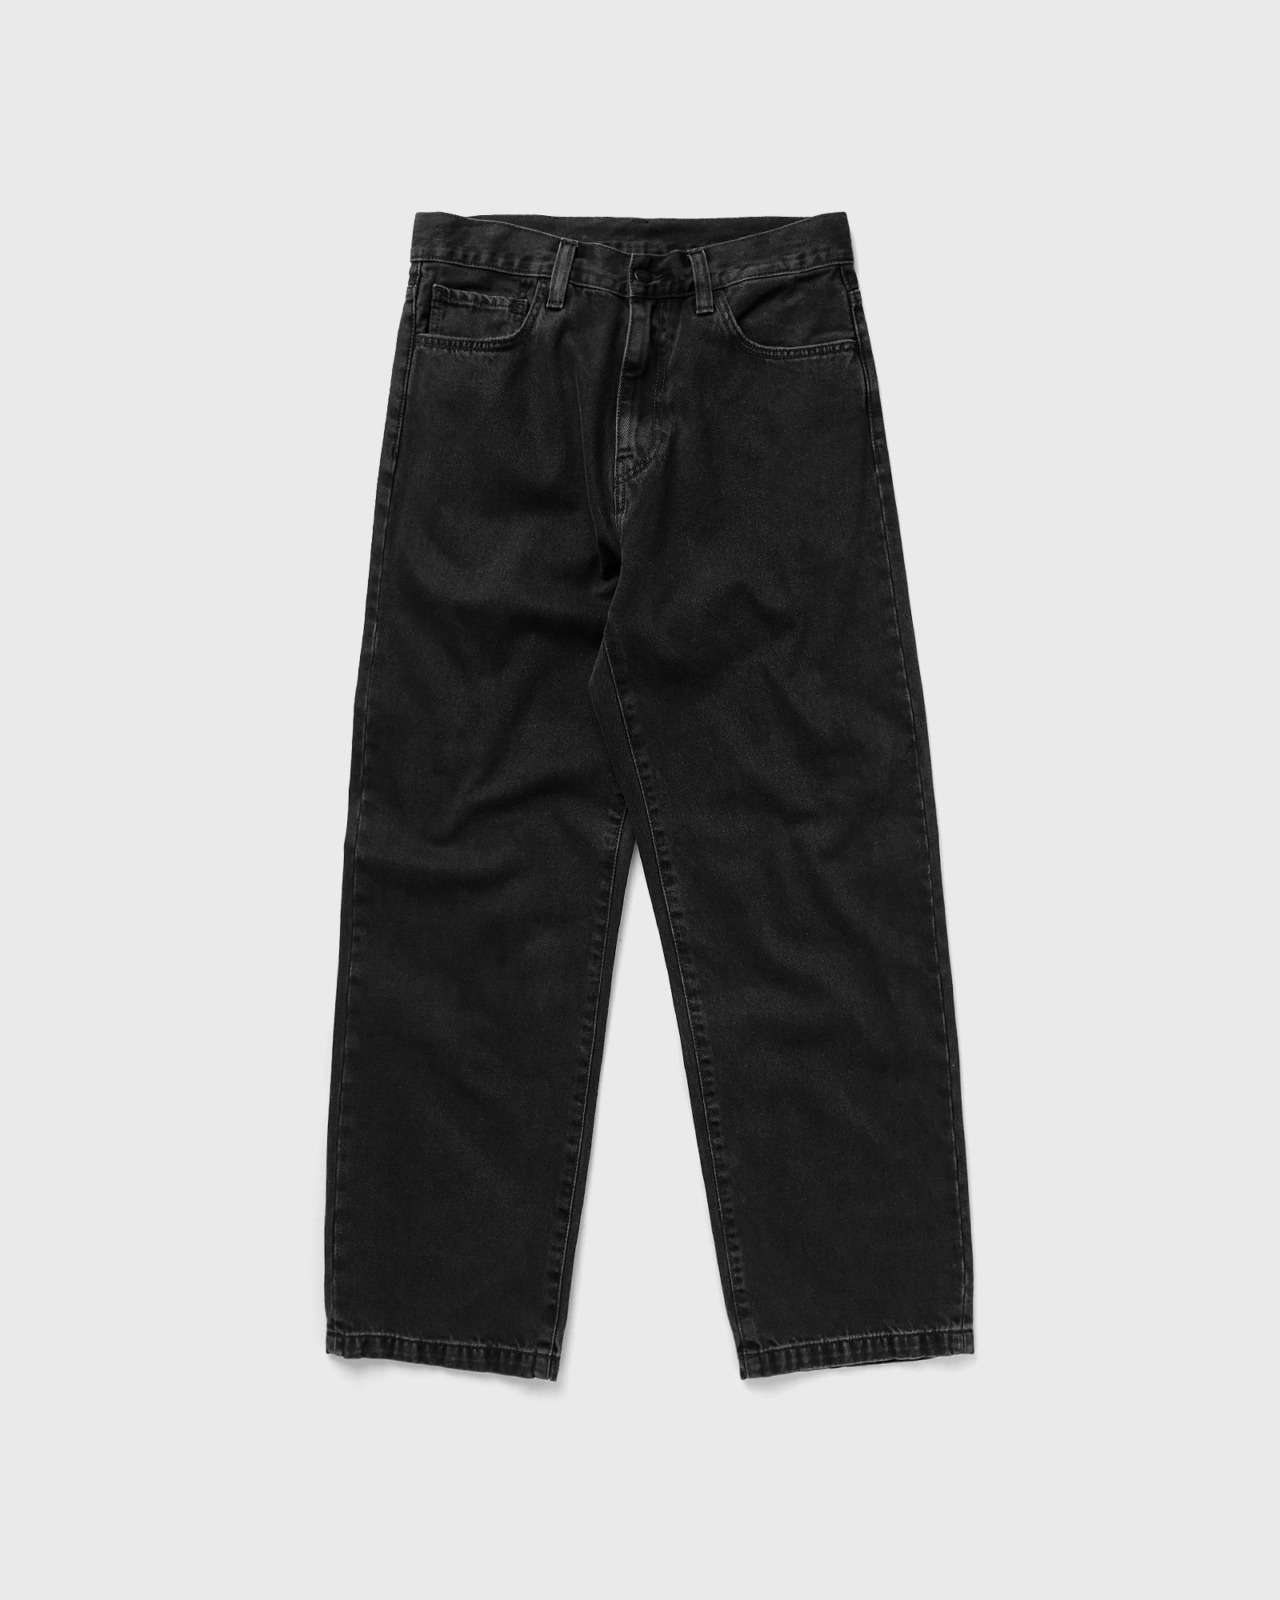 Carhartt Men Jeans in Black Bstn GOOFASH